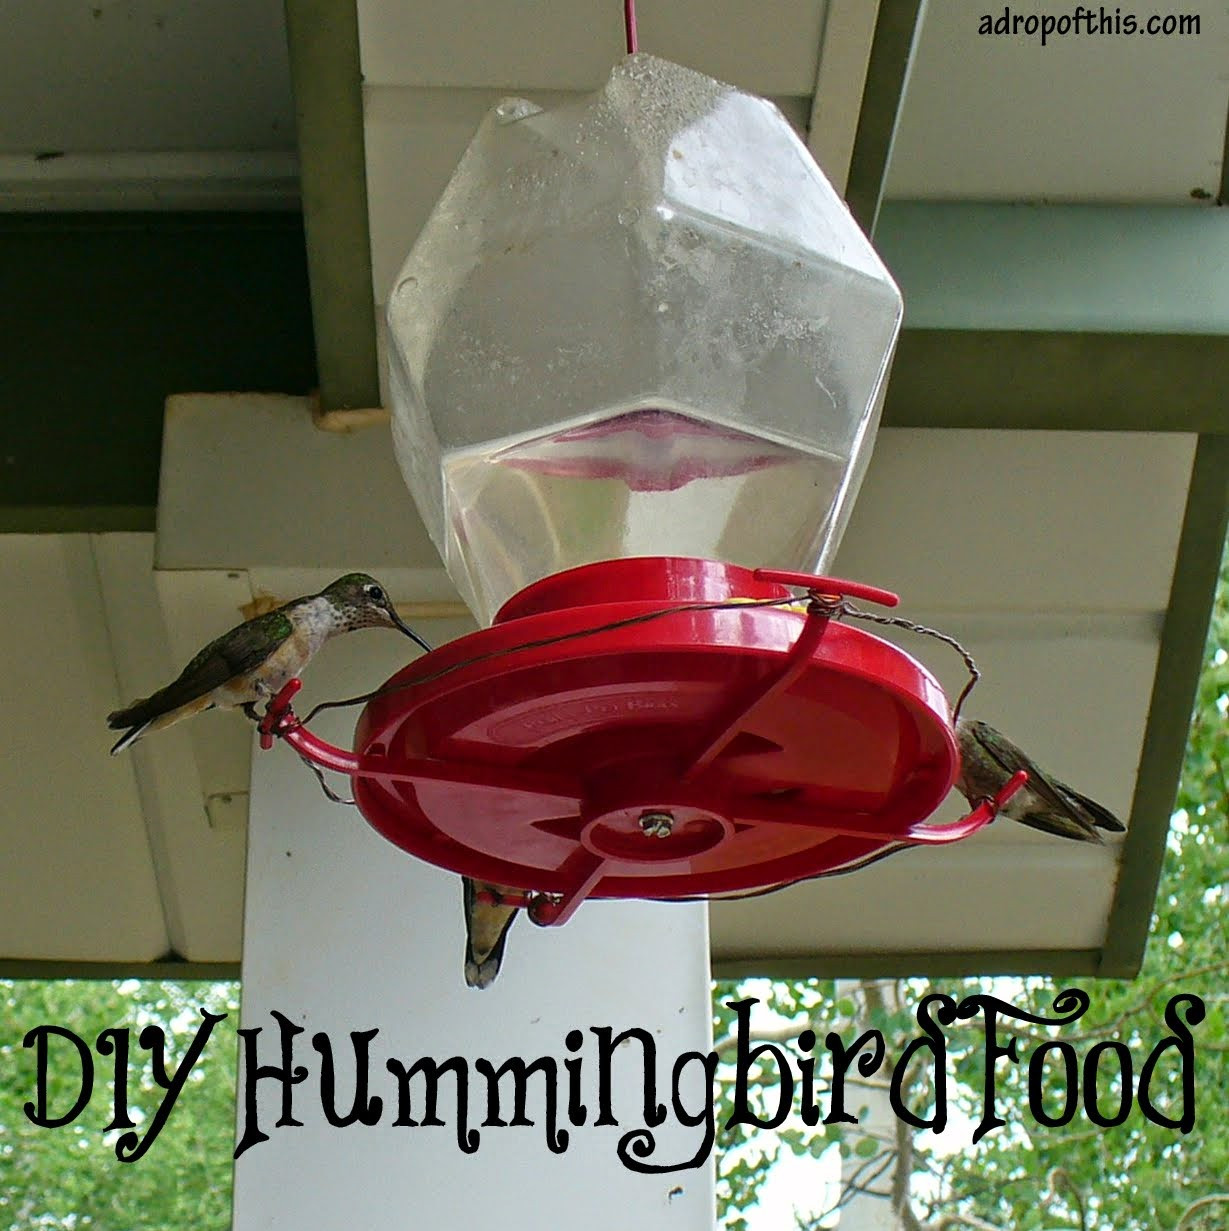 Best ideas about Hummingbird Food DIY
. Save or Pin A Drop of This DIY Hummingbird Food Now.